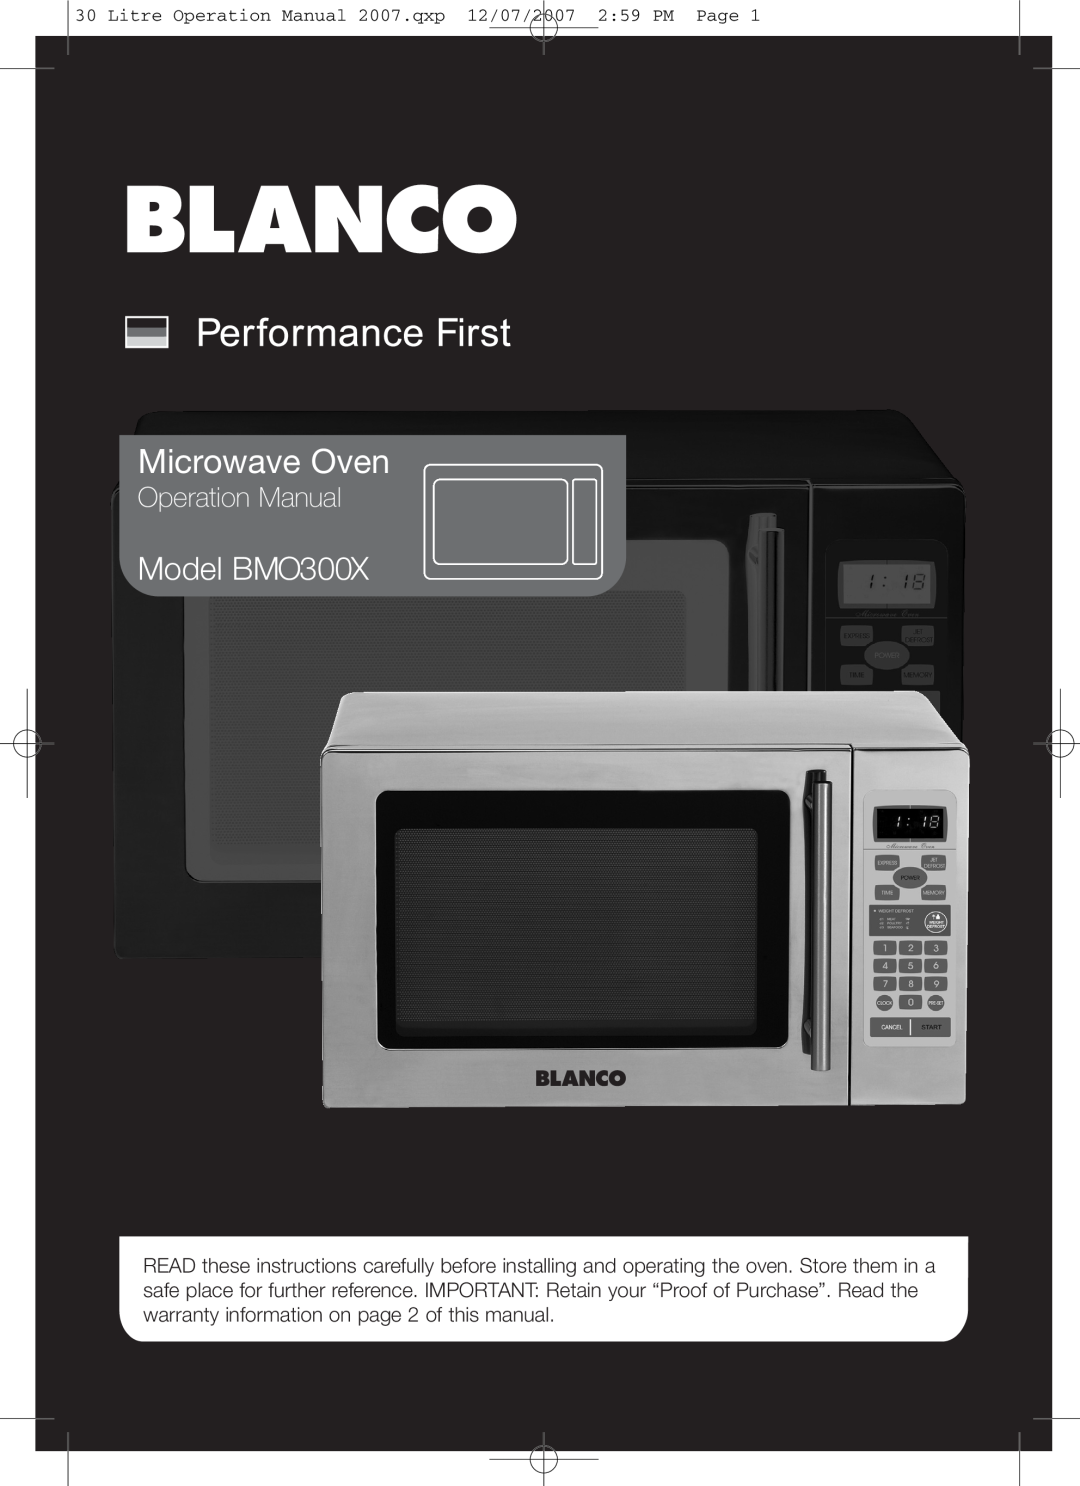 Blanco operation manual Microwave Oven, Model BMO300X 